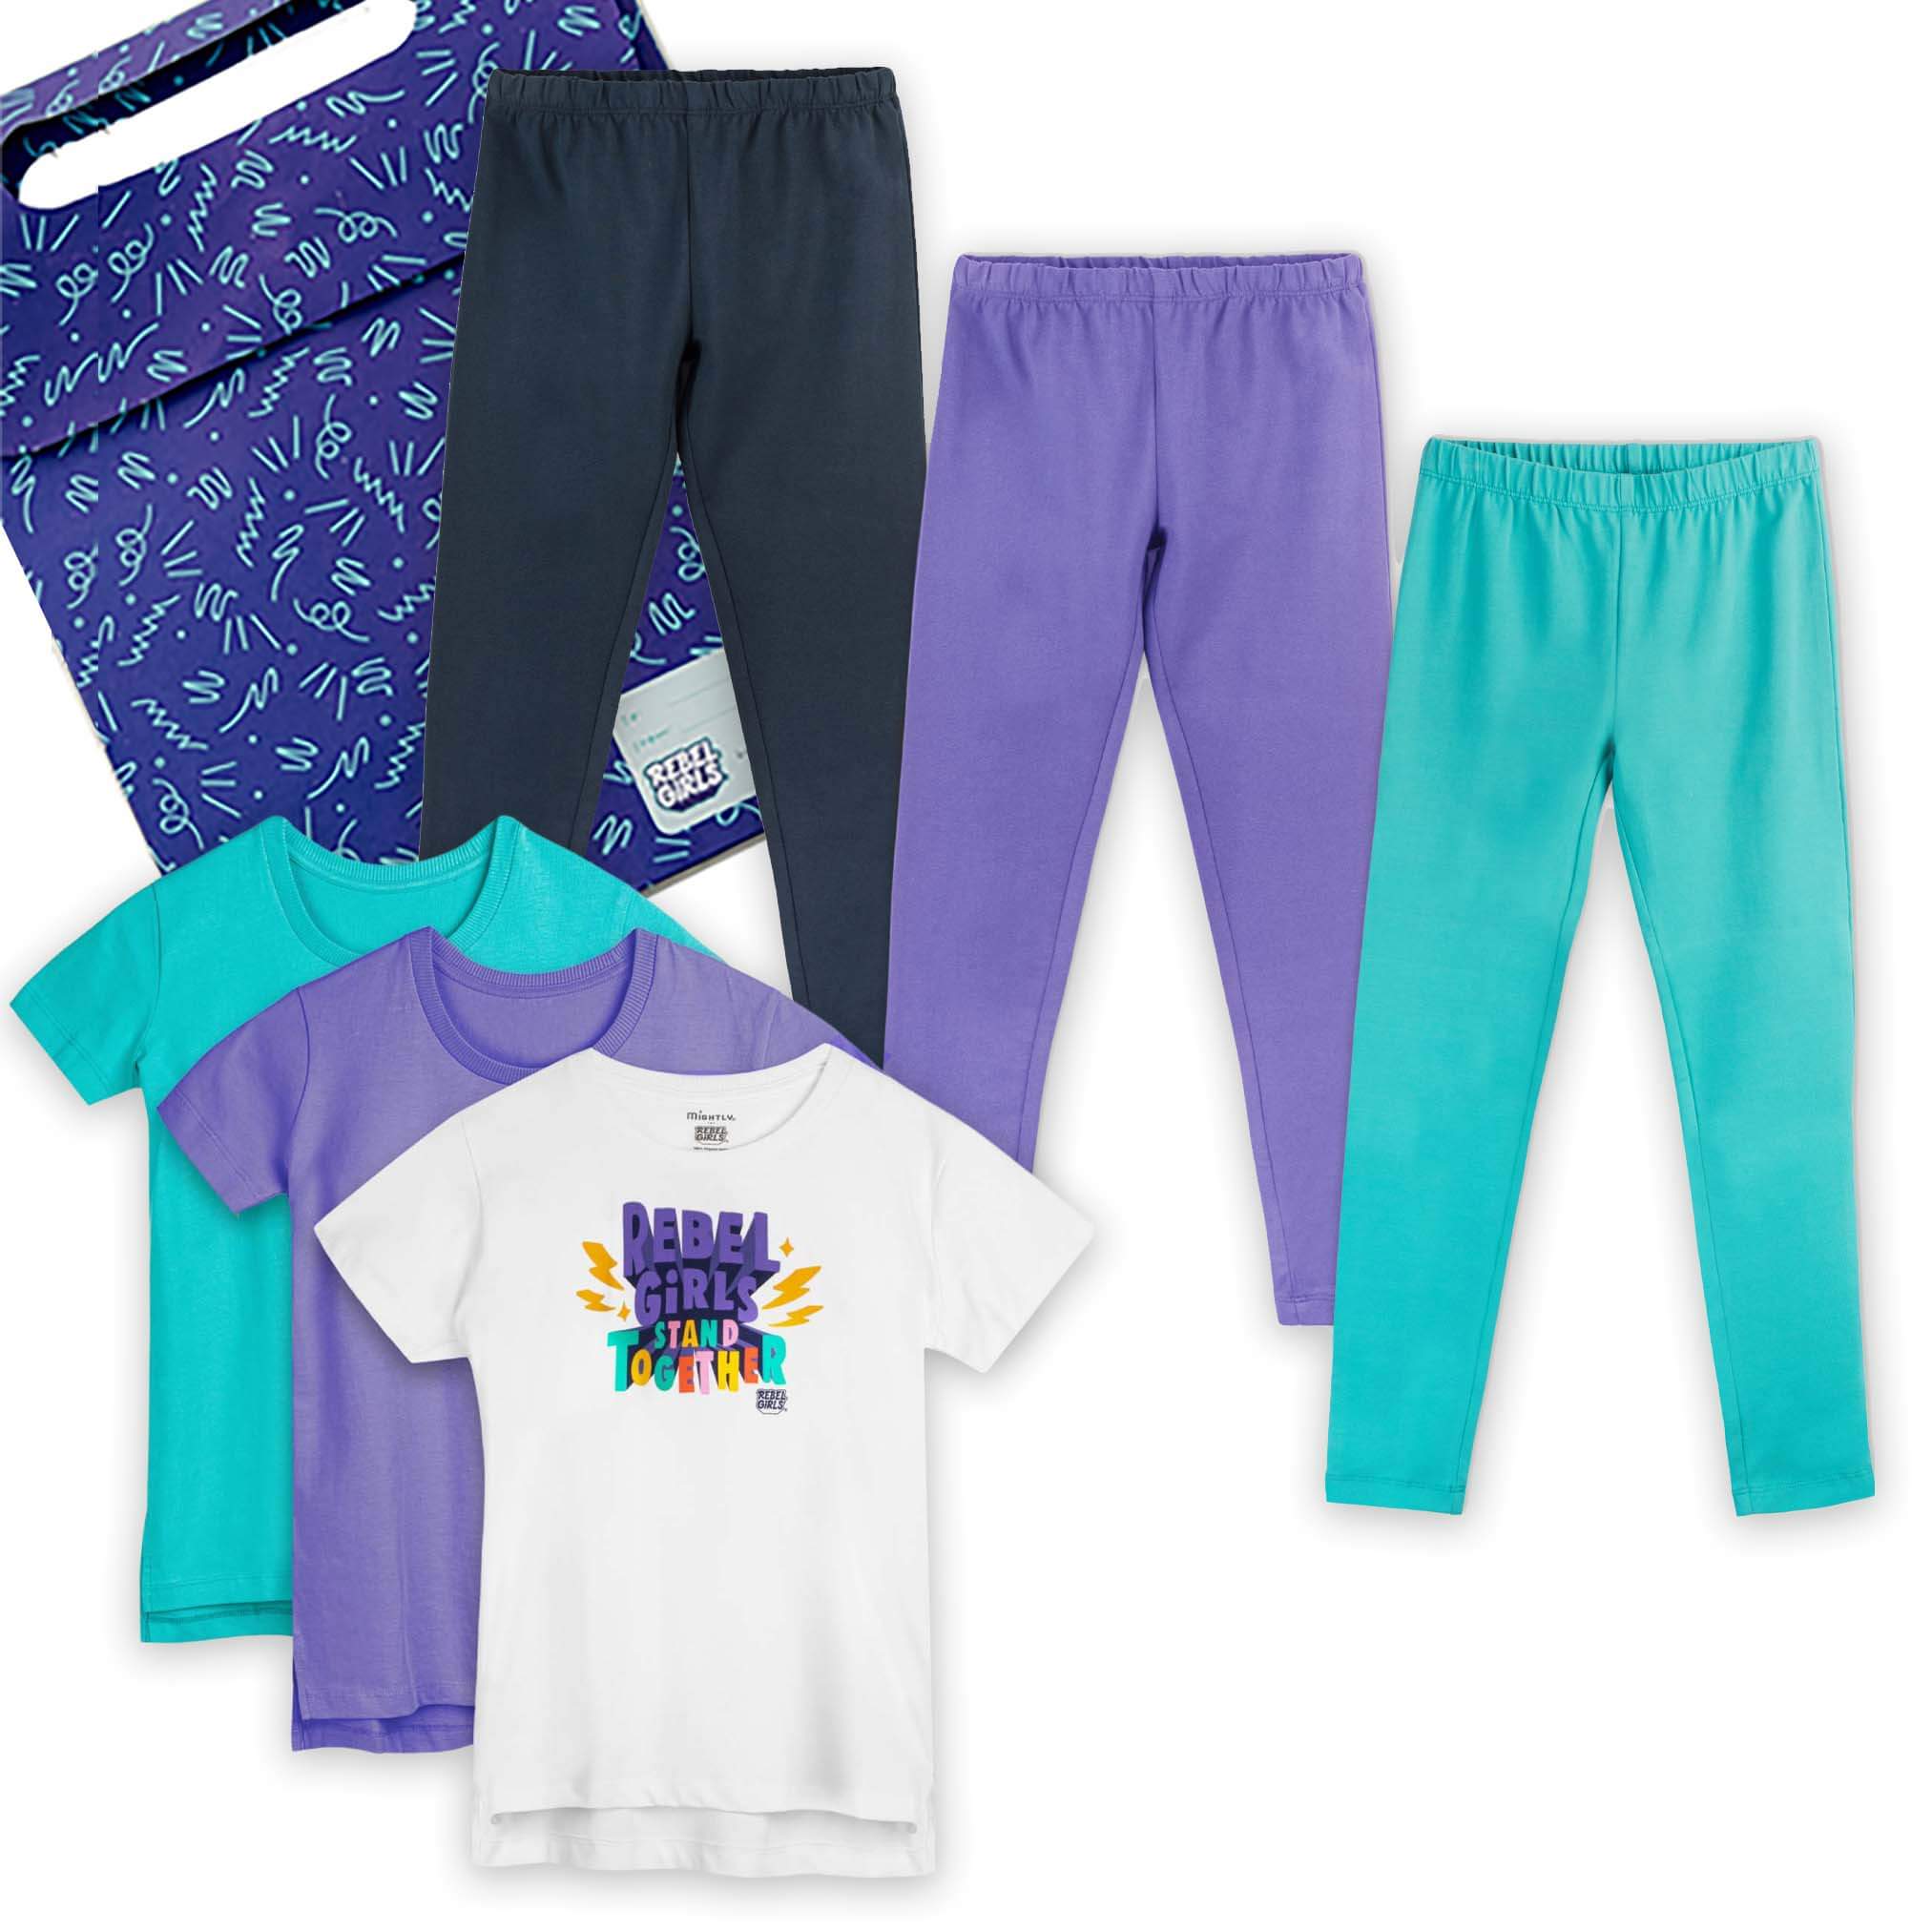 Rebel Girls Pajama, Racerback Bra and Biker Short Gift Set - Mightly